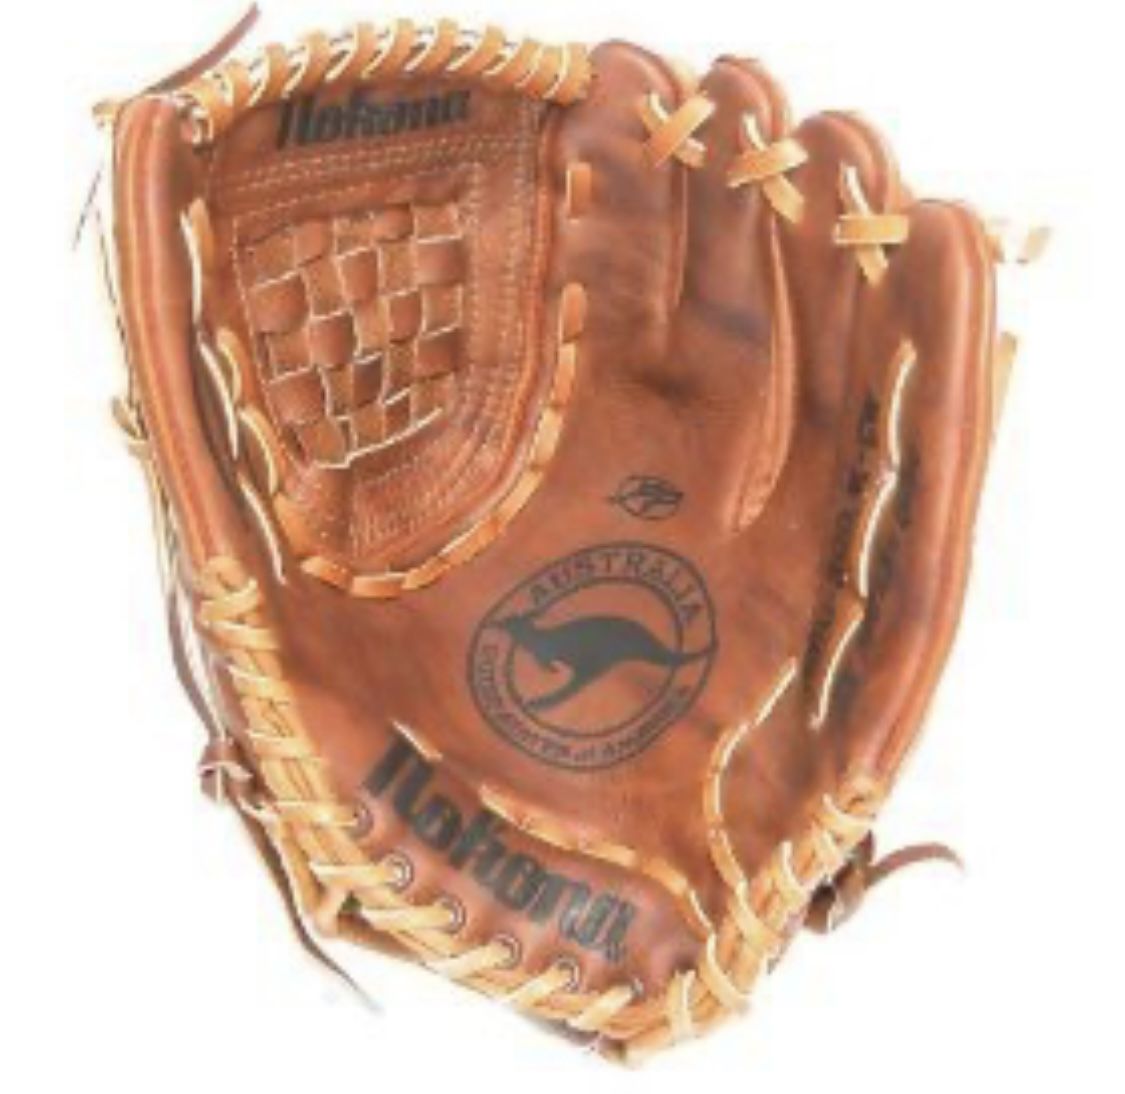 Nokona Right-Handed Baseball/Softball Glove 11.5 Inch. AMG-300 K-CW